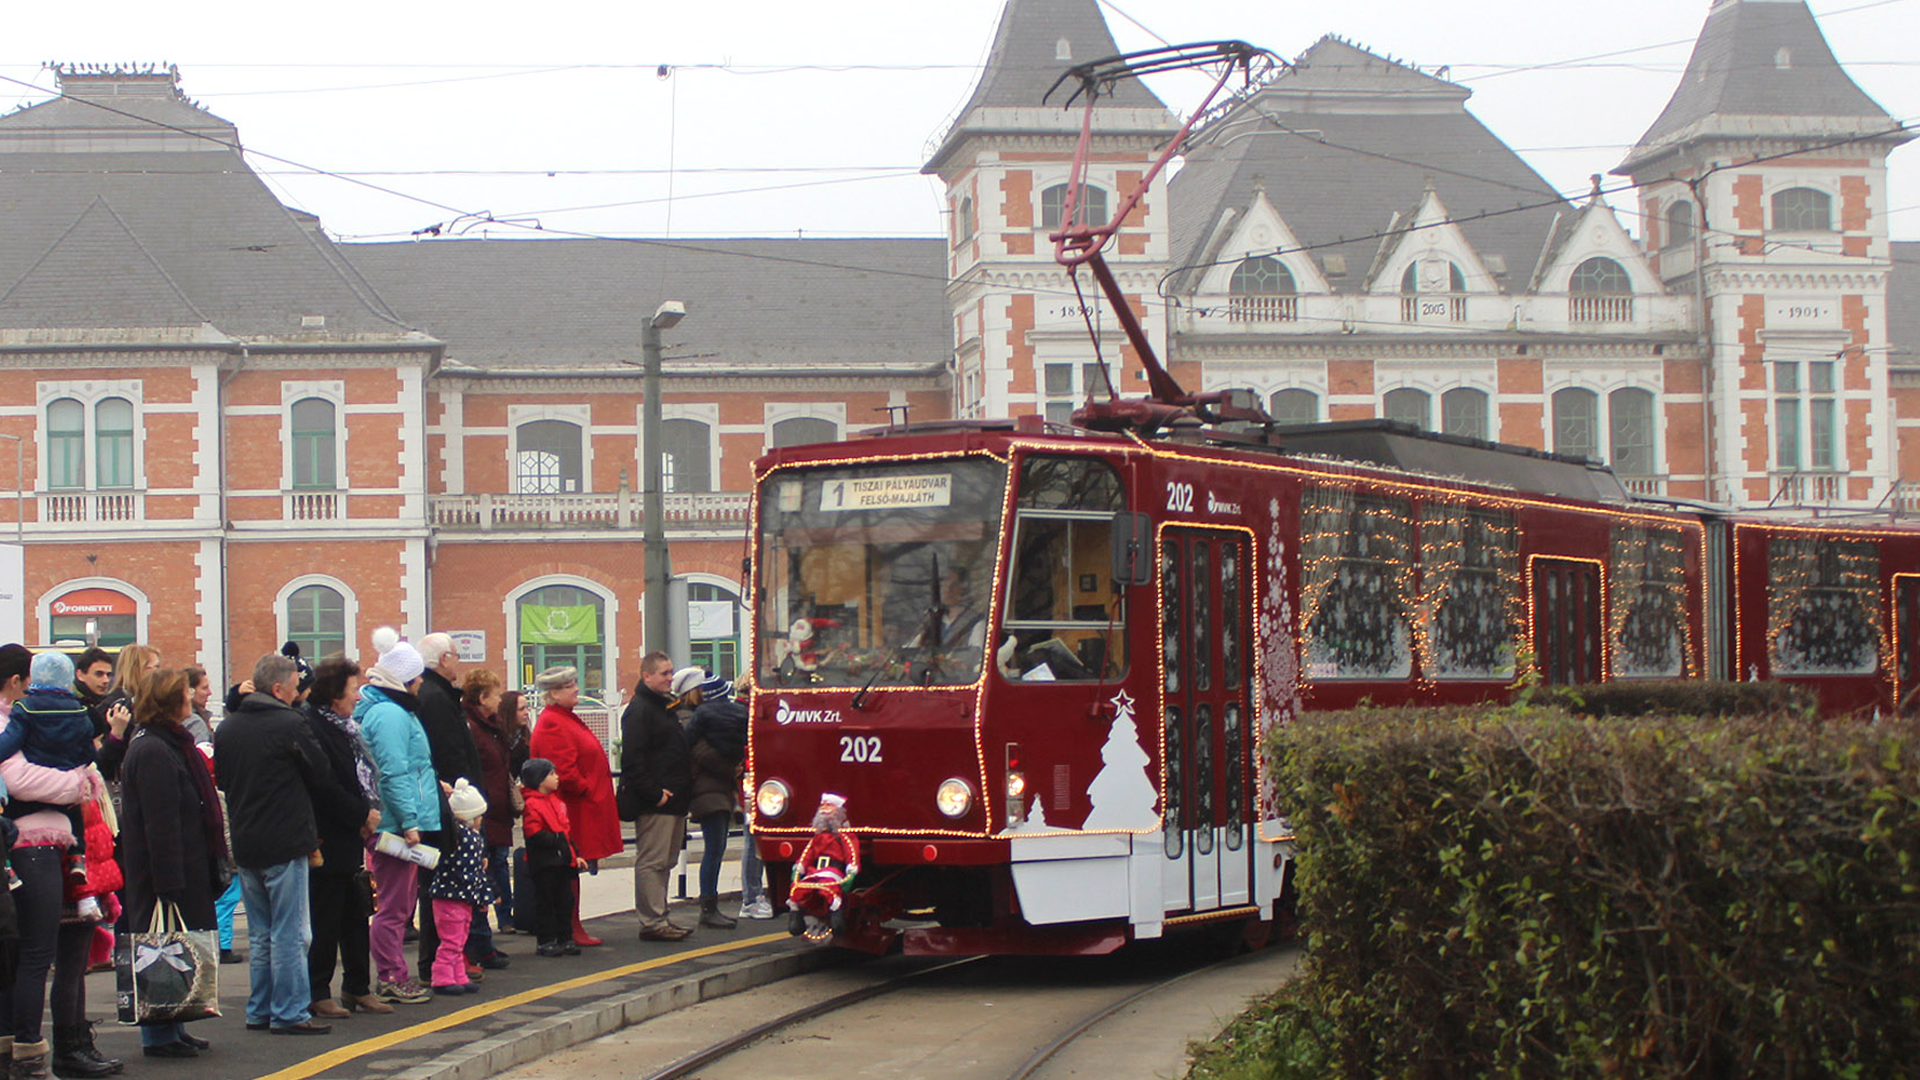 Miskolc’s Advent Tram 2015